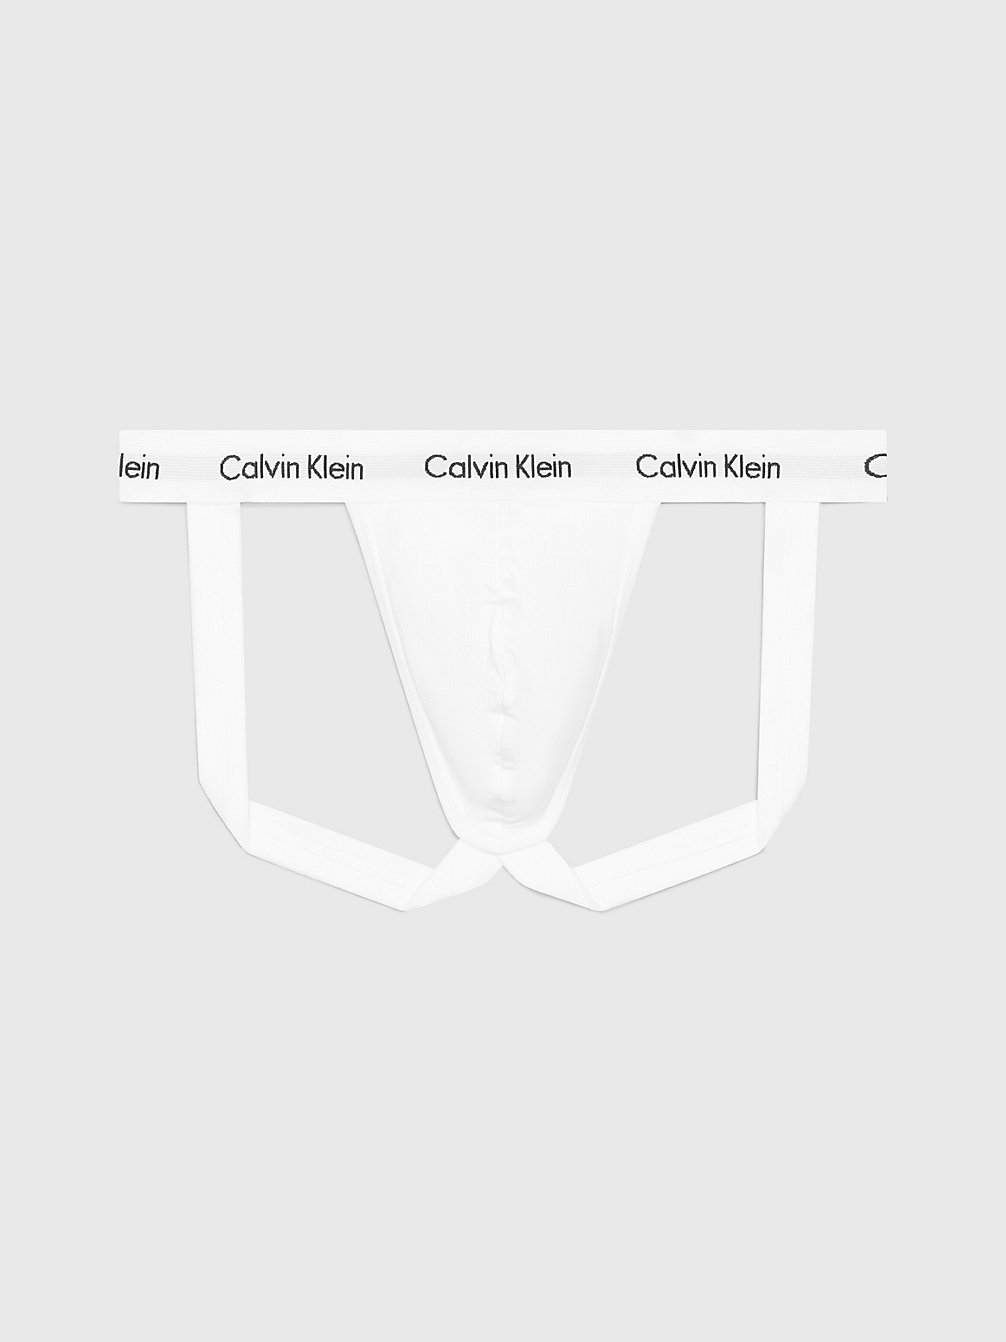 String Homme - CK Deconstructed > WHITE > undefined hommes > Calvin Klein